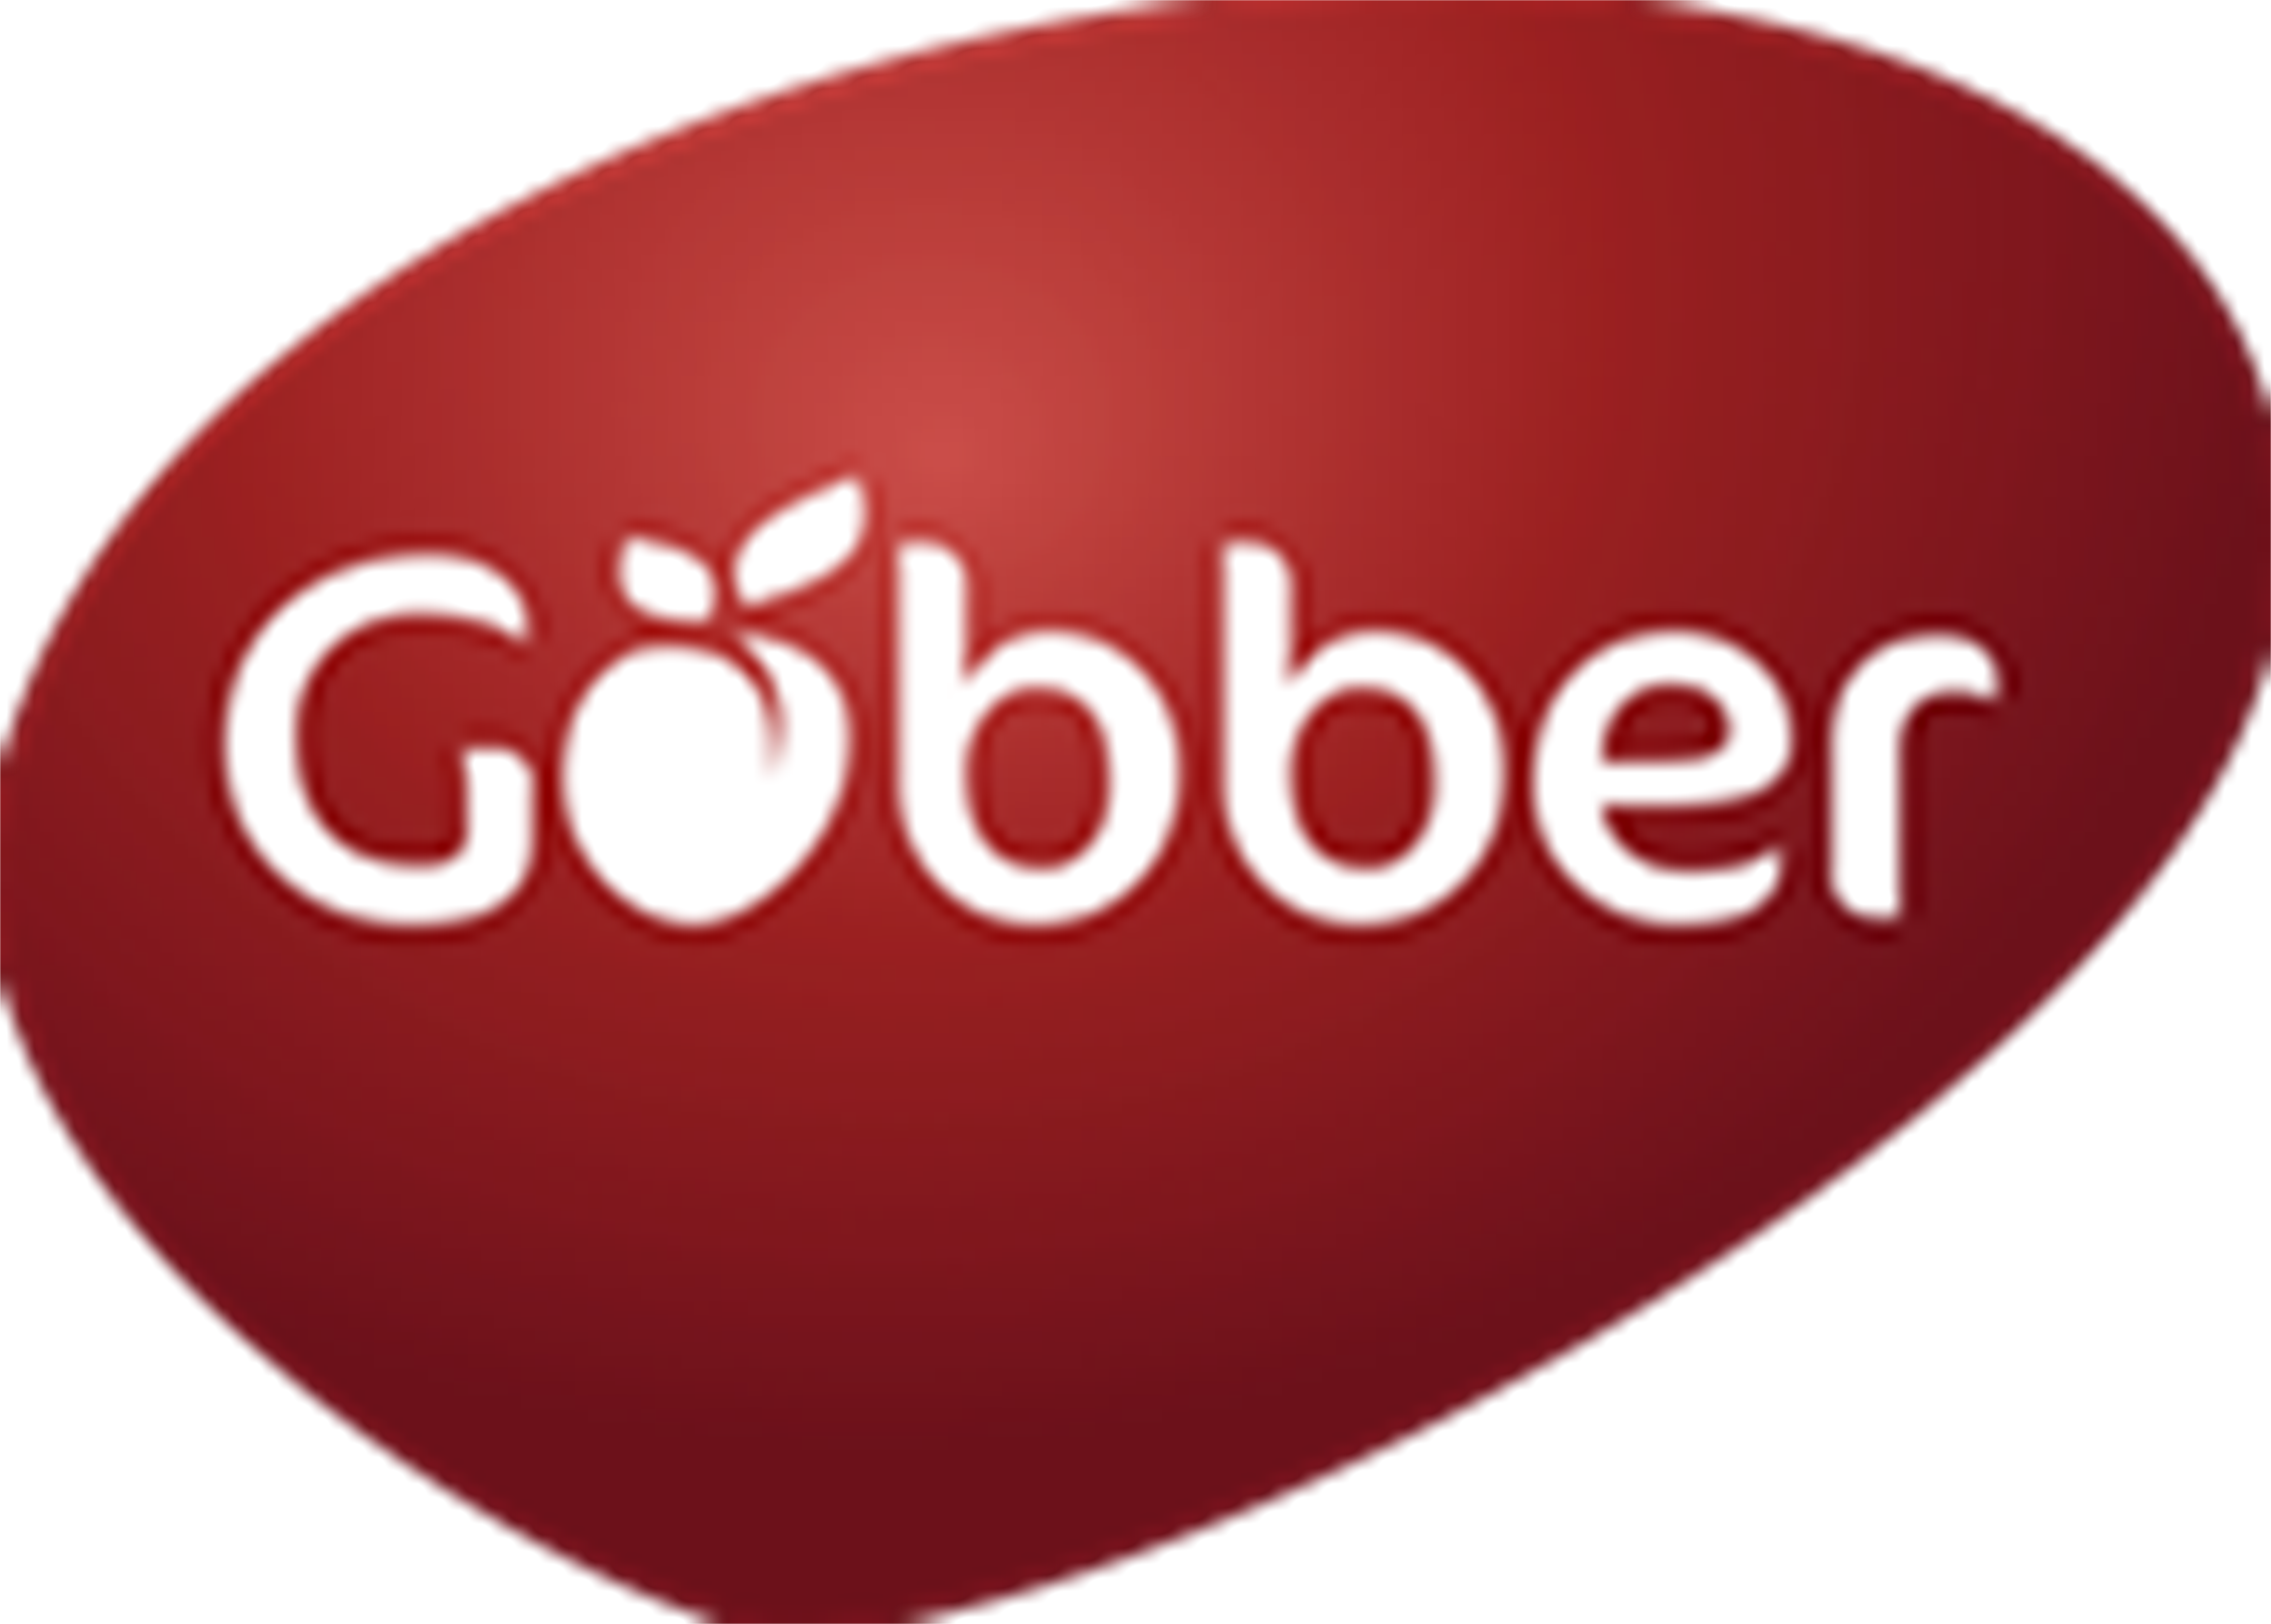 Goebber GmbH